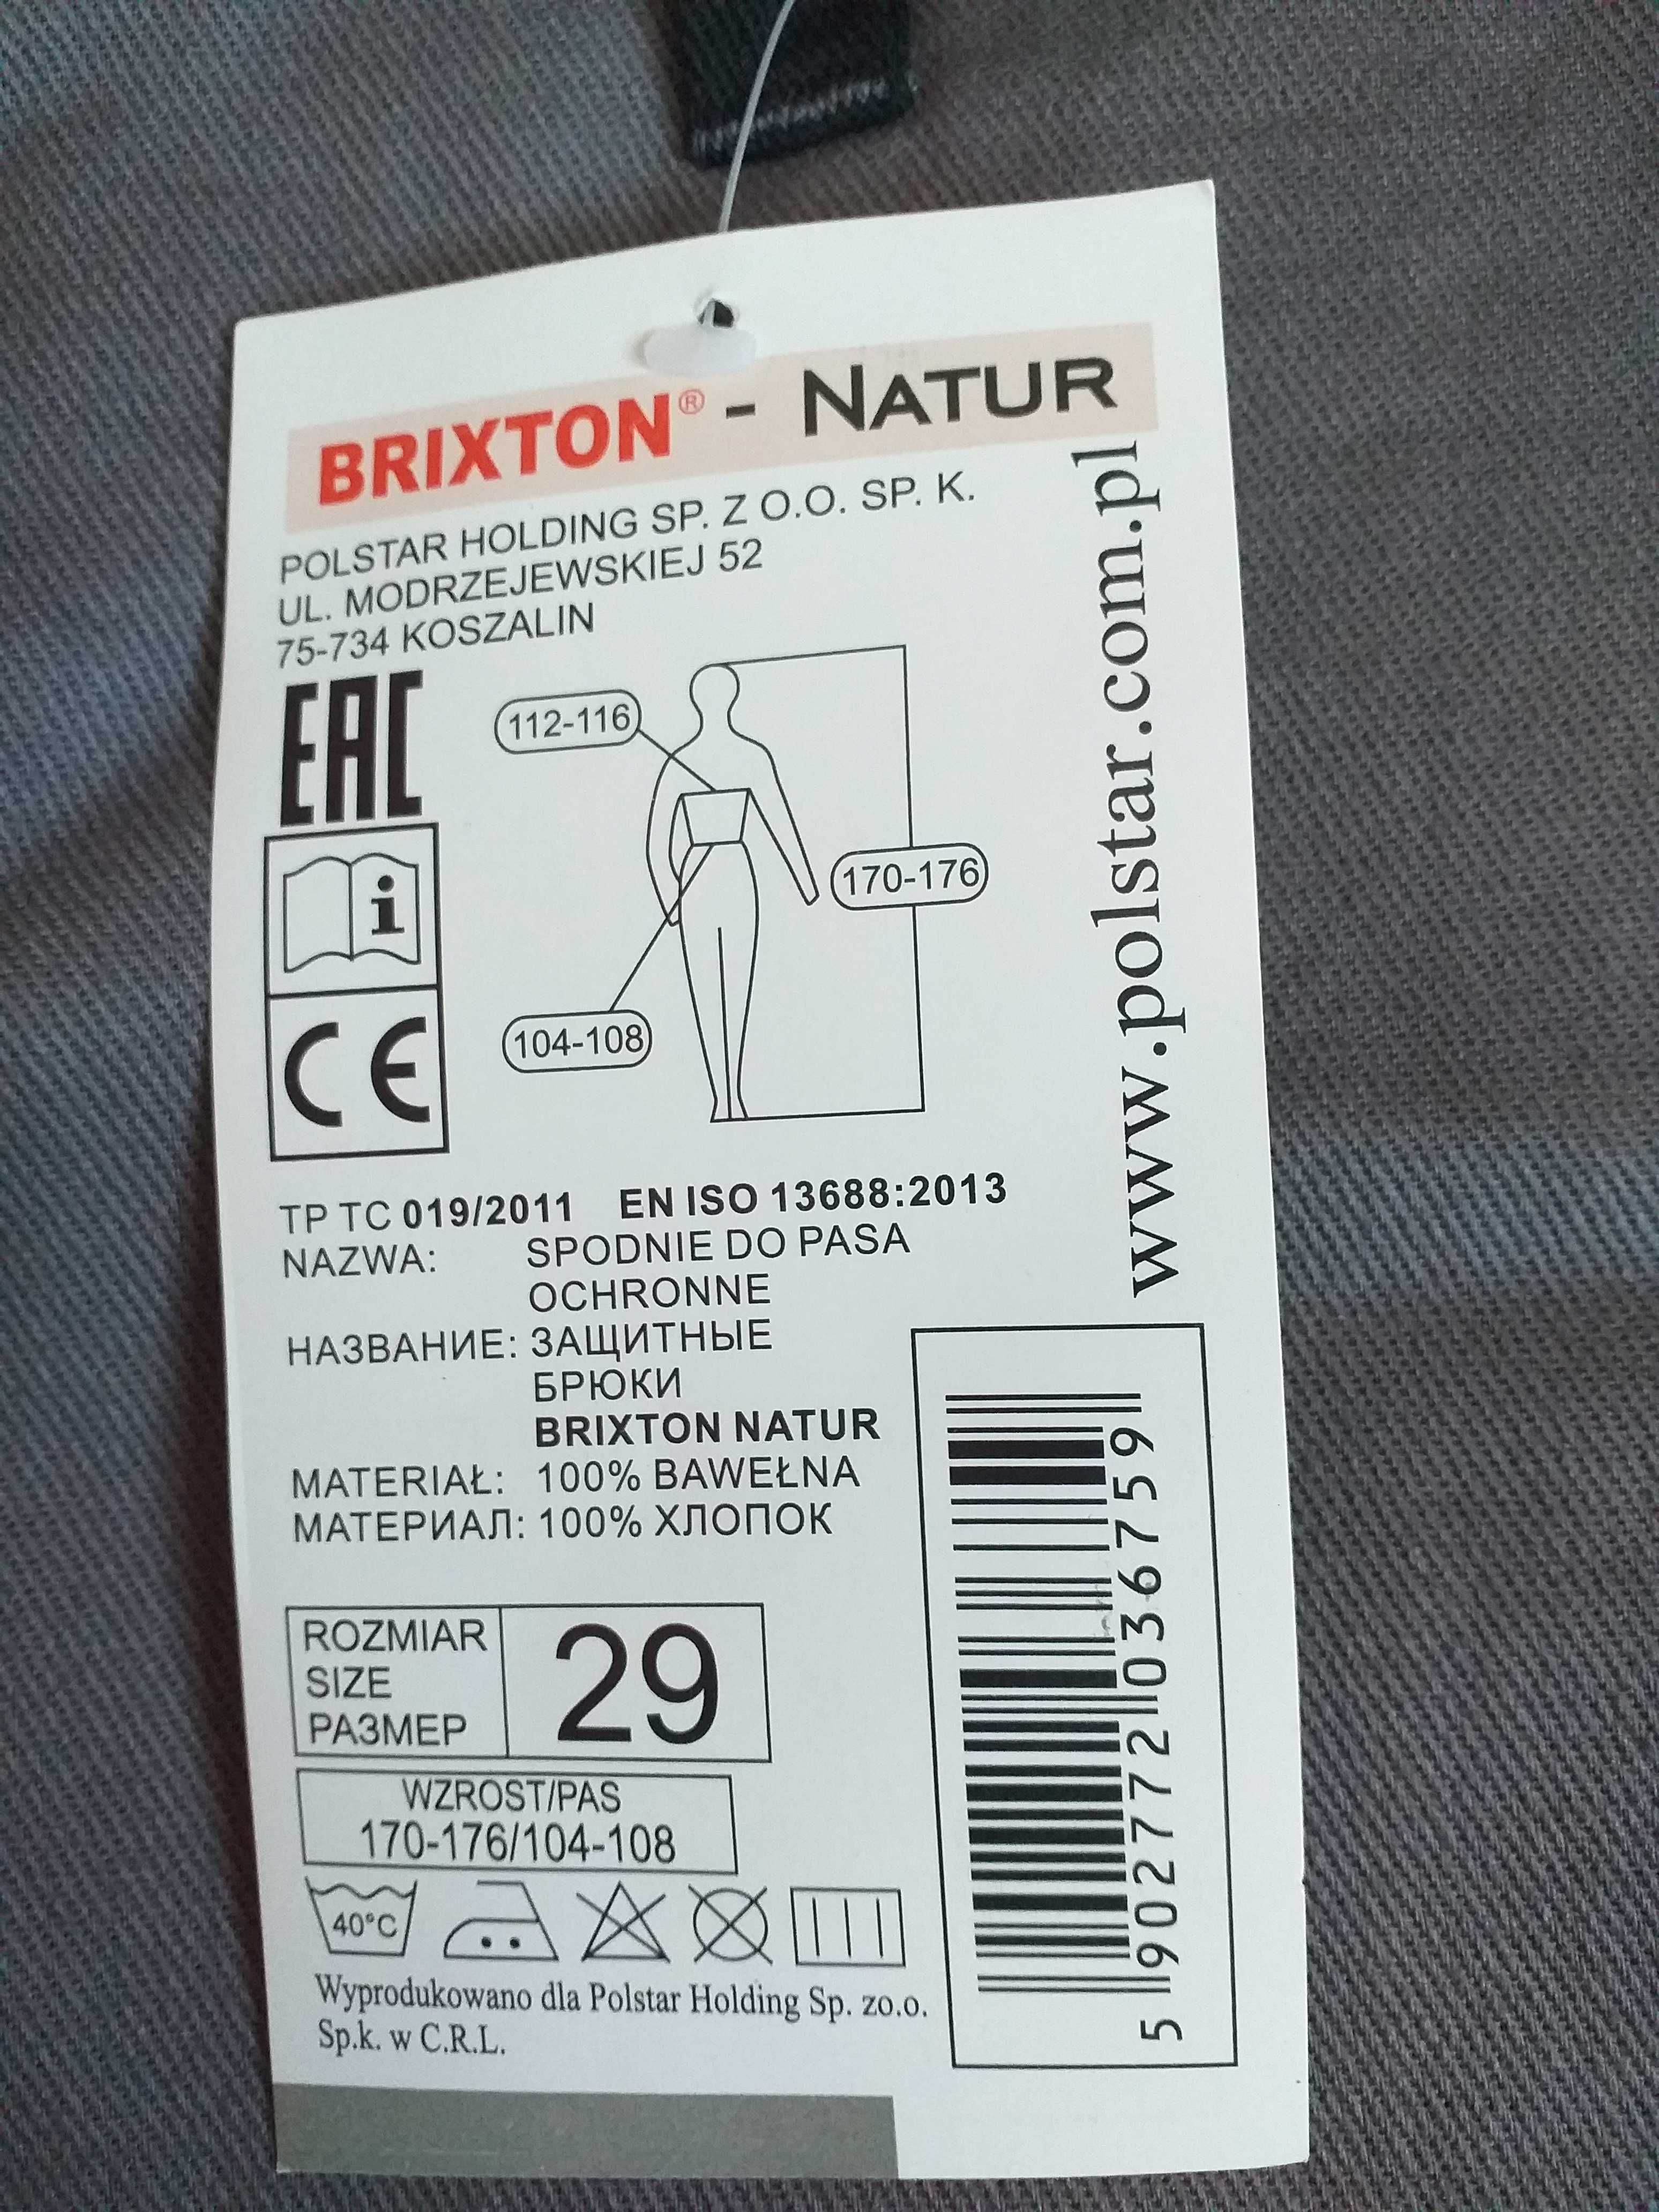 Komplet roboczy marki BRIXTON model NATUR r. 29